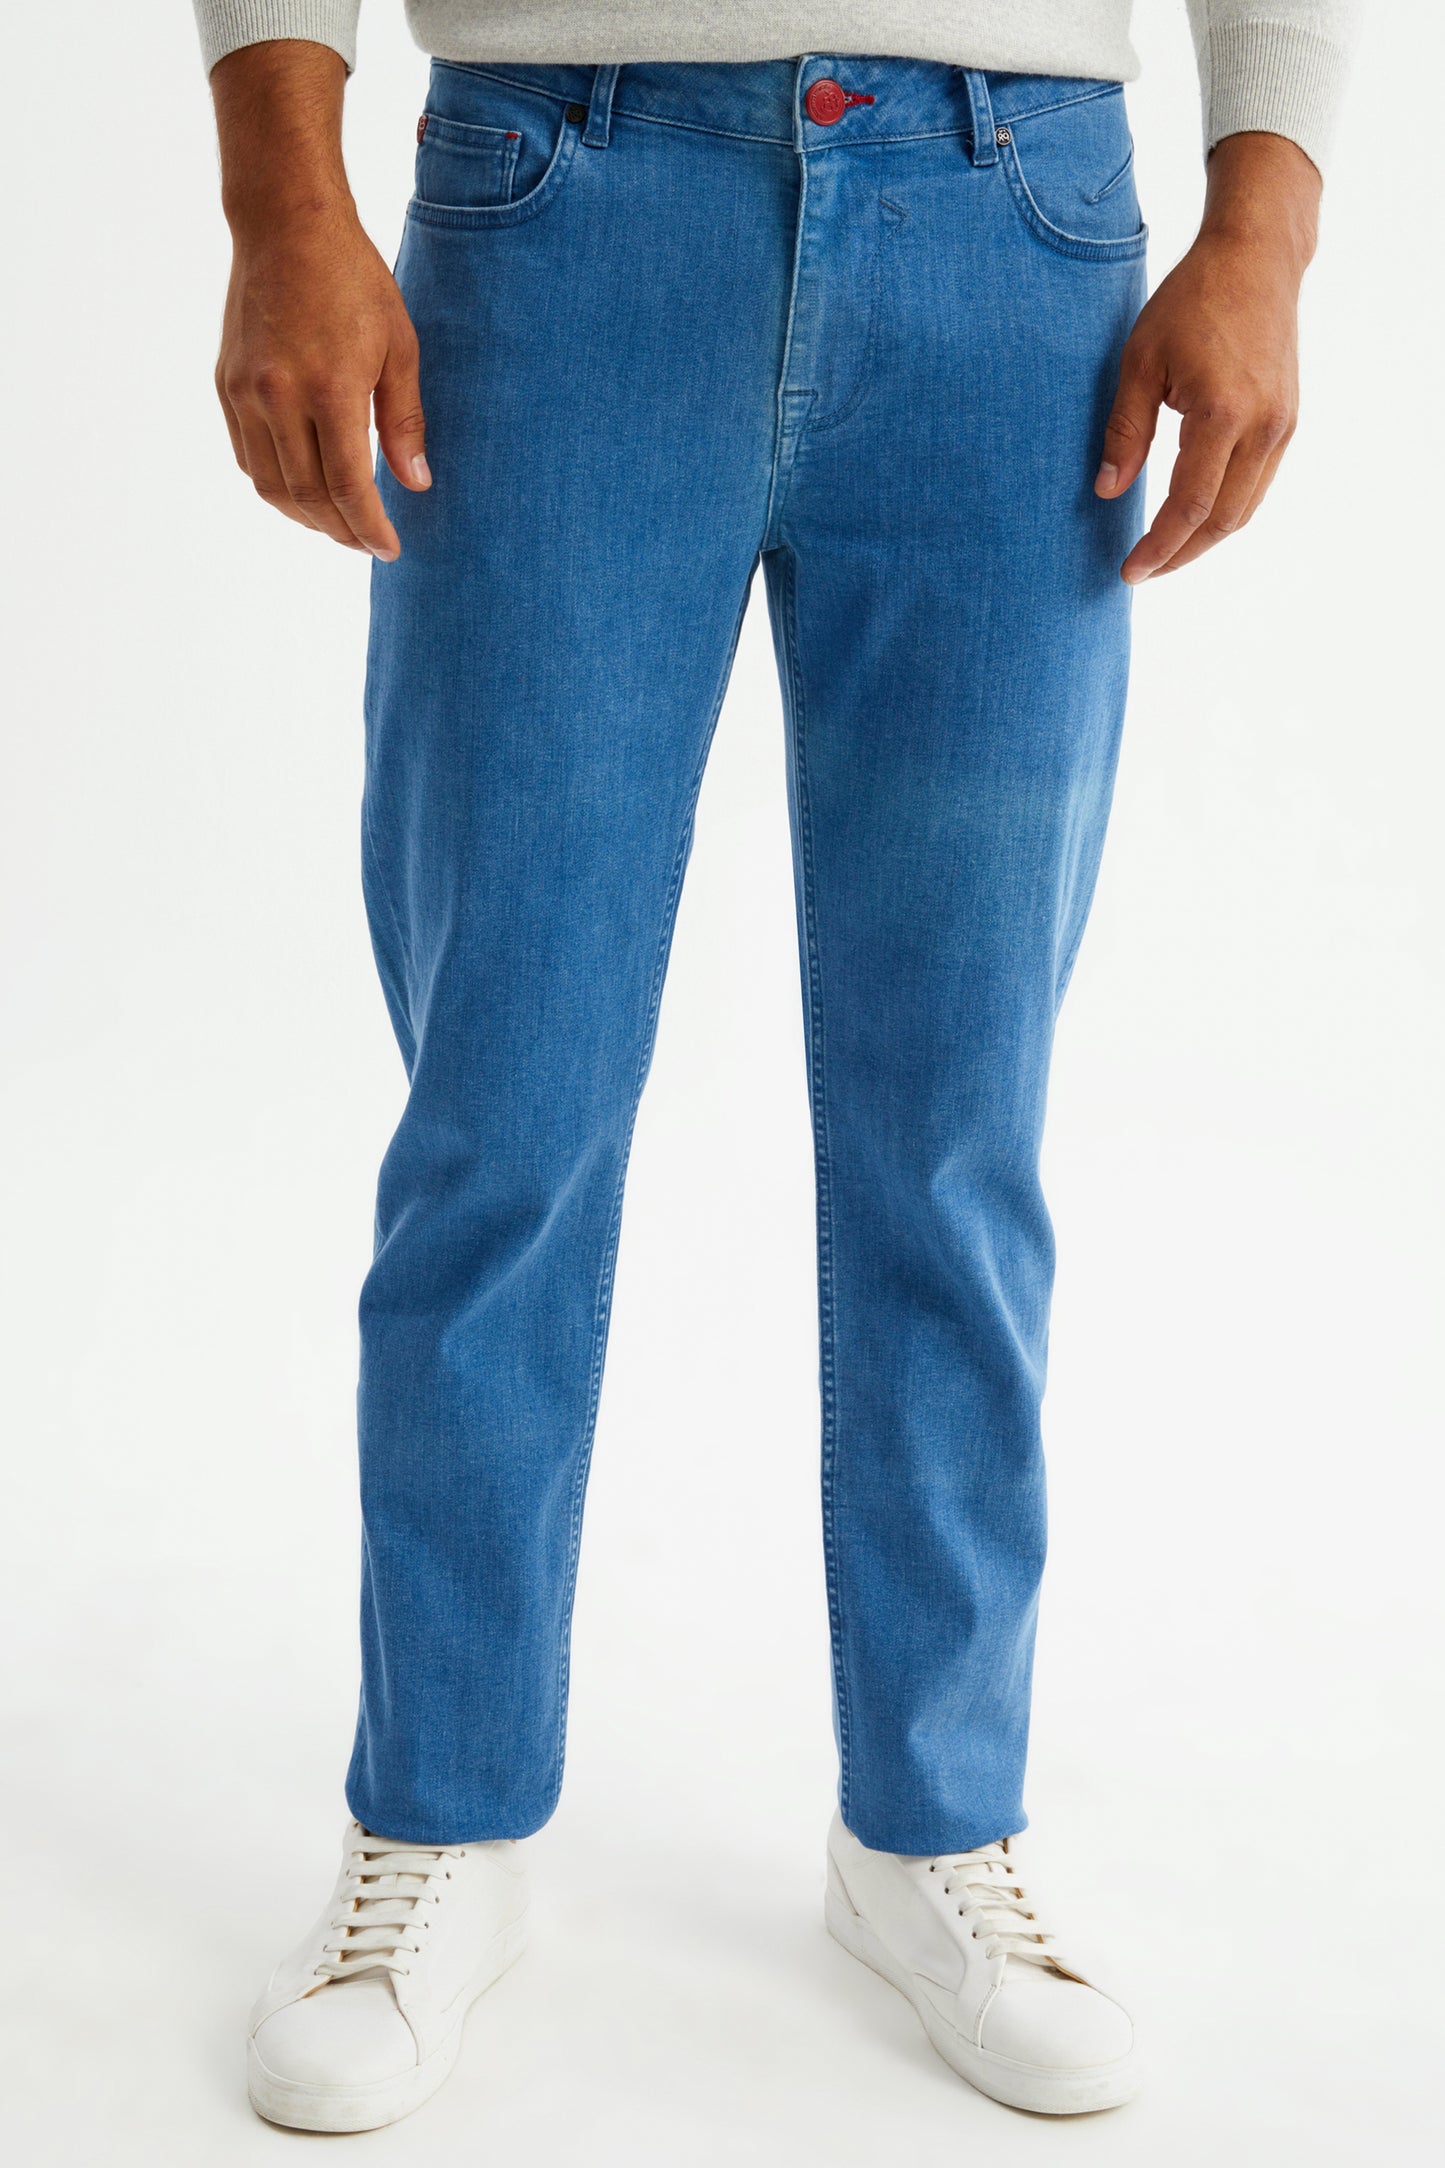 DFR89 Jeans - Brunello/Avatar